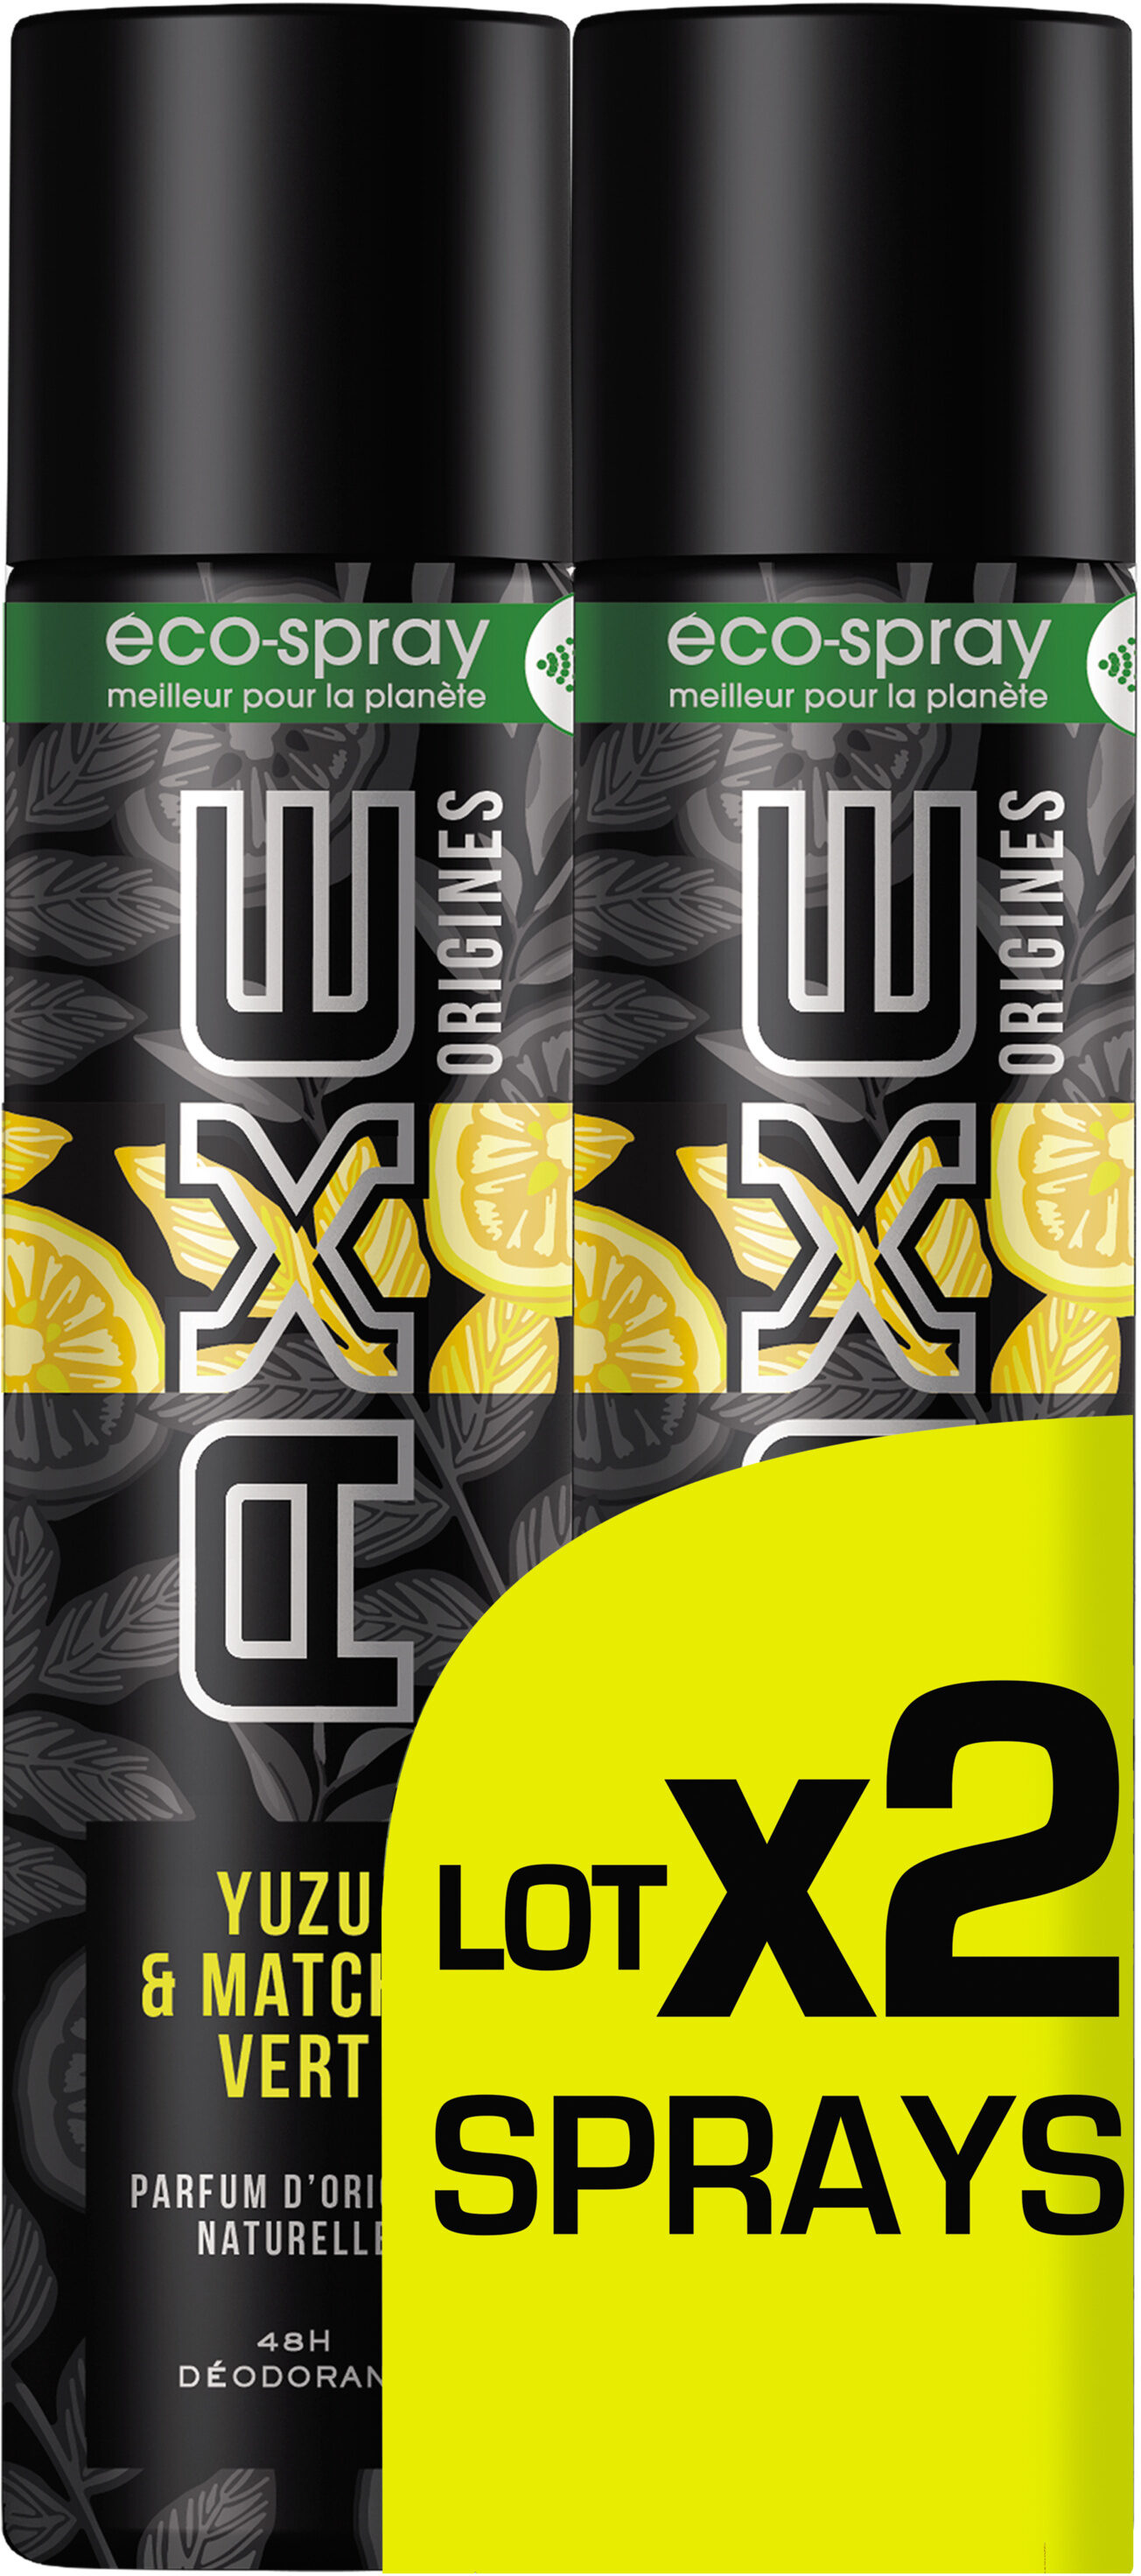 AXE Déodorant Éco-Spray Origines Yuzu & Matcha Vert Lot 2x85ml - Product - fr